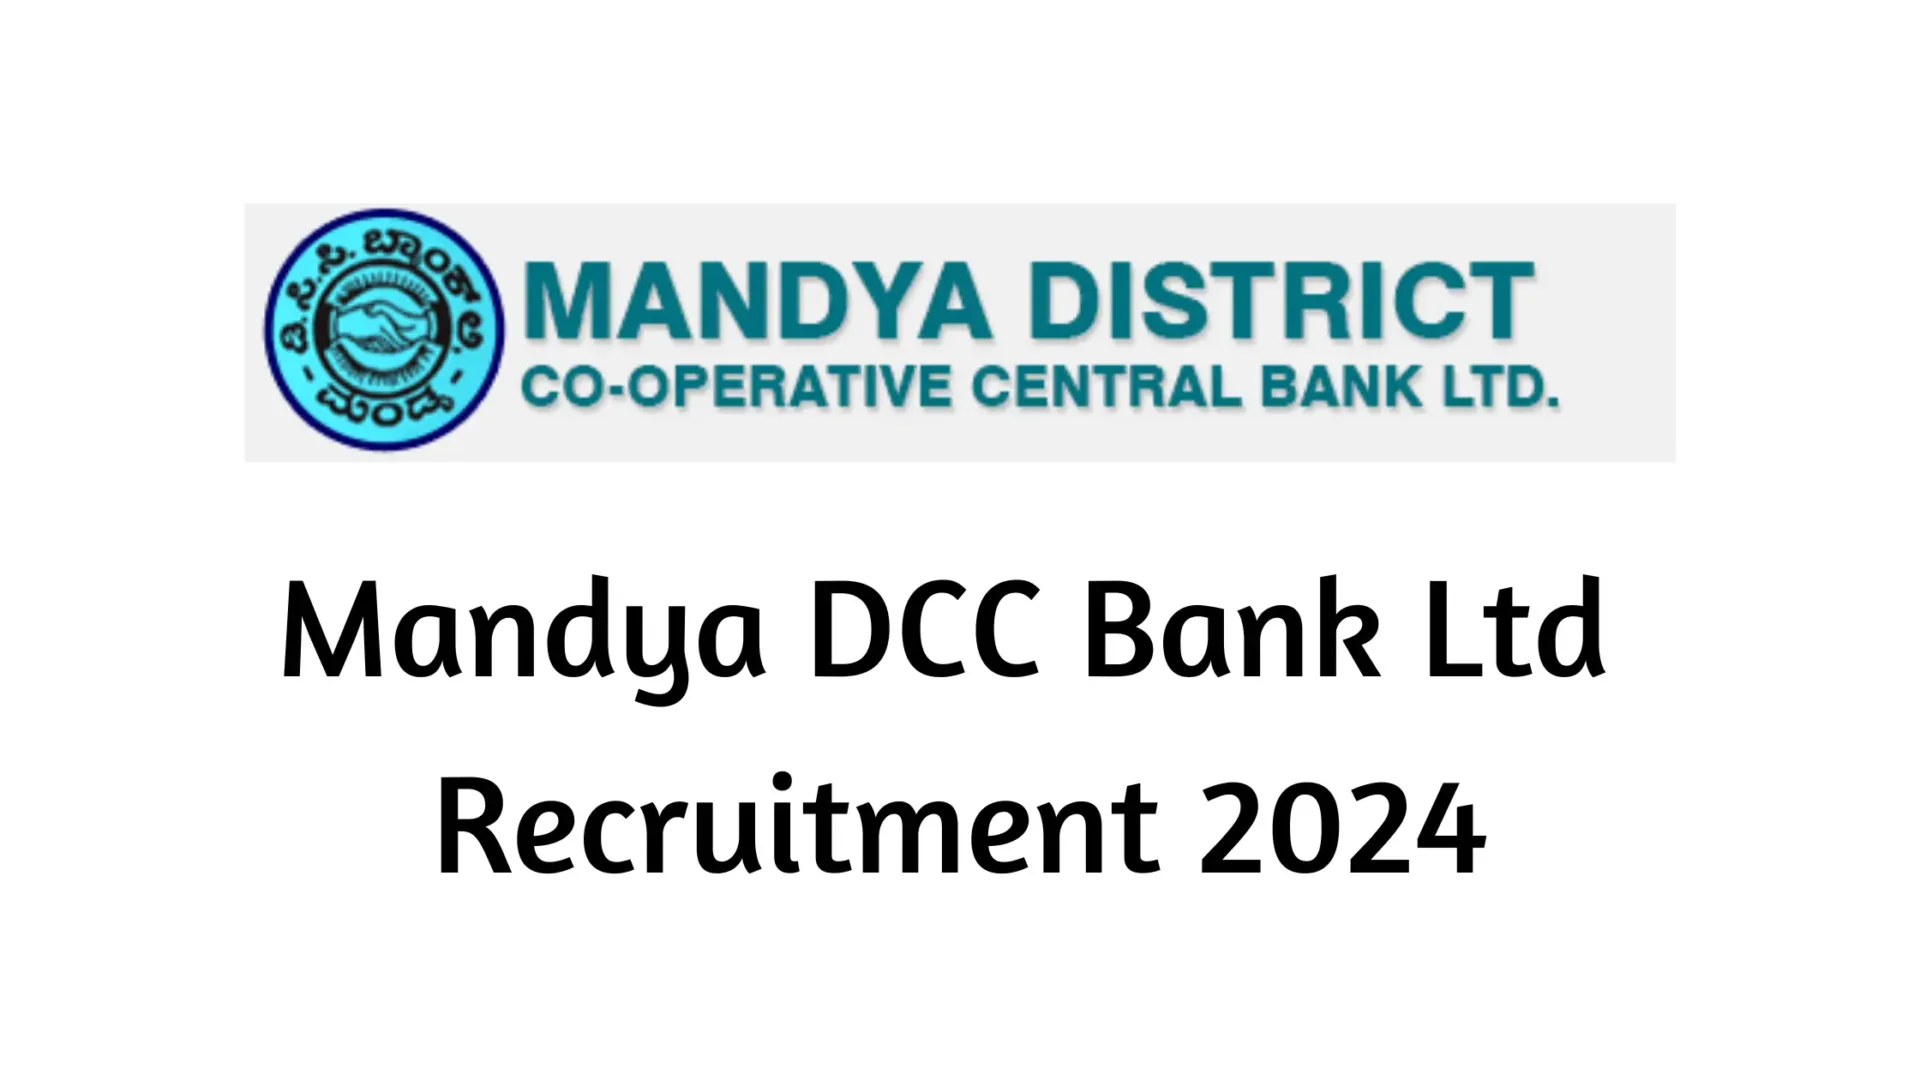 Mandya DCC Bank Ltd Recruitment 2024